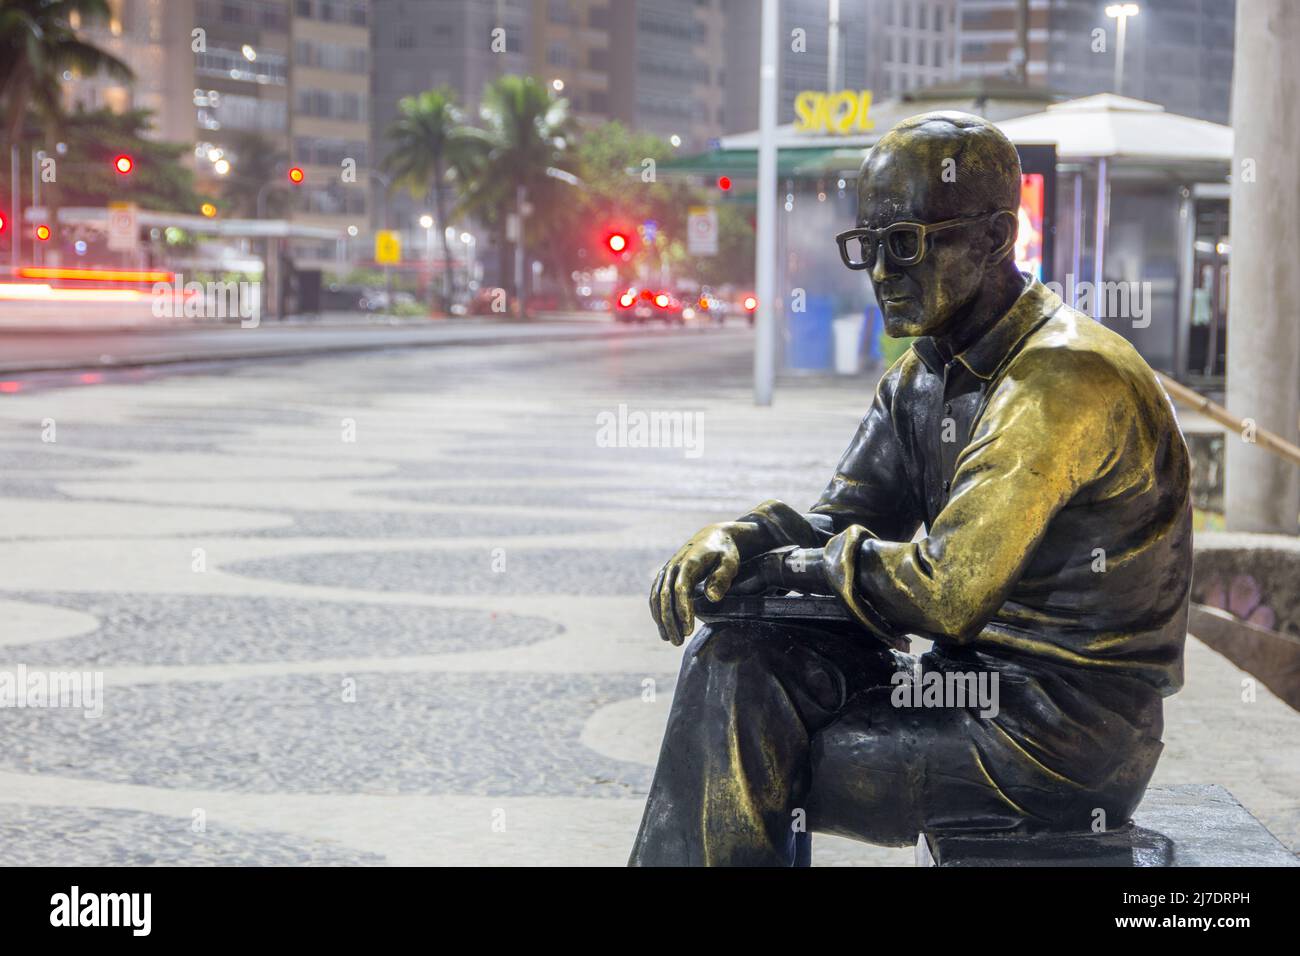 Statue of the poet by Carlos Drummond de Andrade in Copacabana in Rio de Janeiro Brazil - March 06, 2022: Statue of Carlos drummond de Andrade in Rio Stock Photo